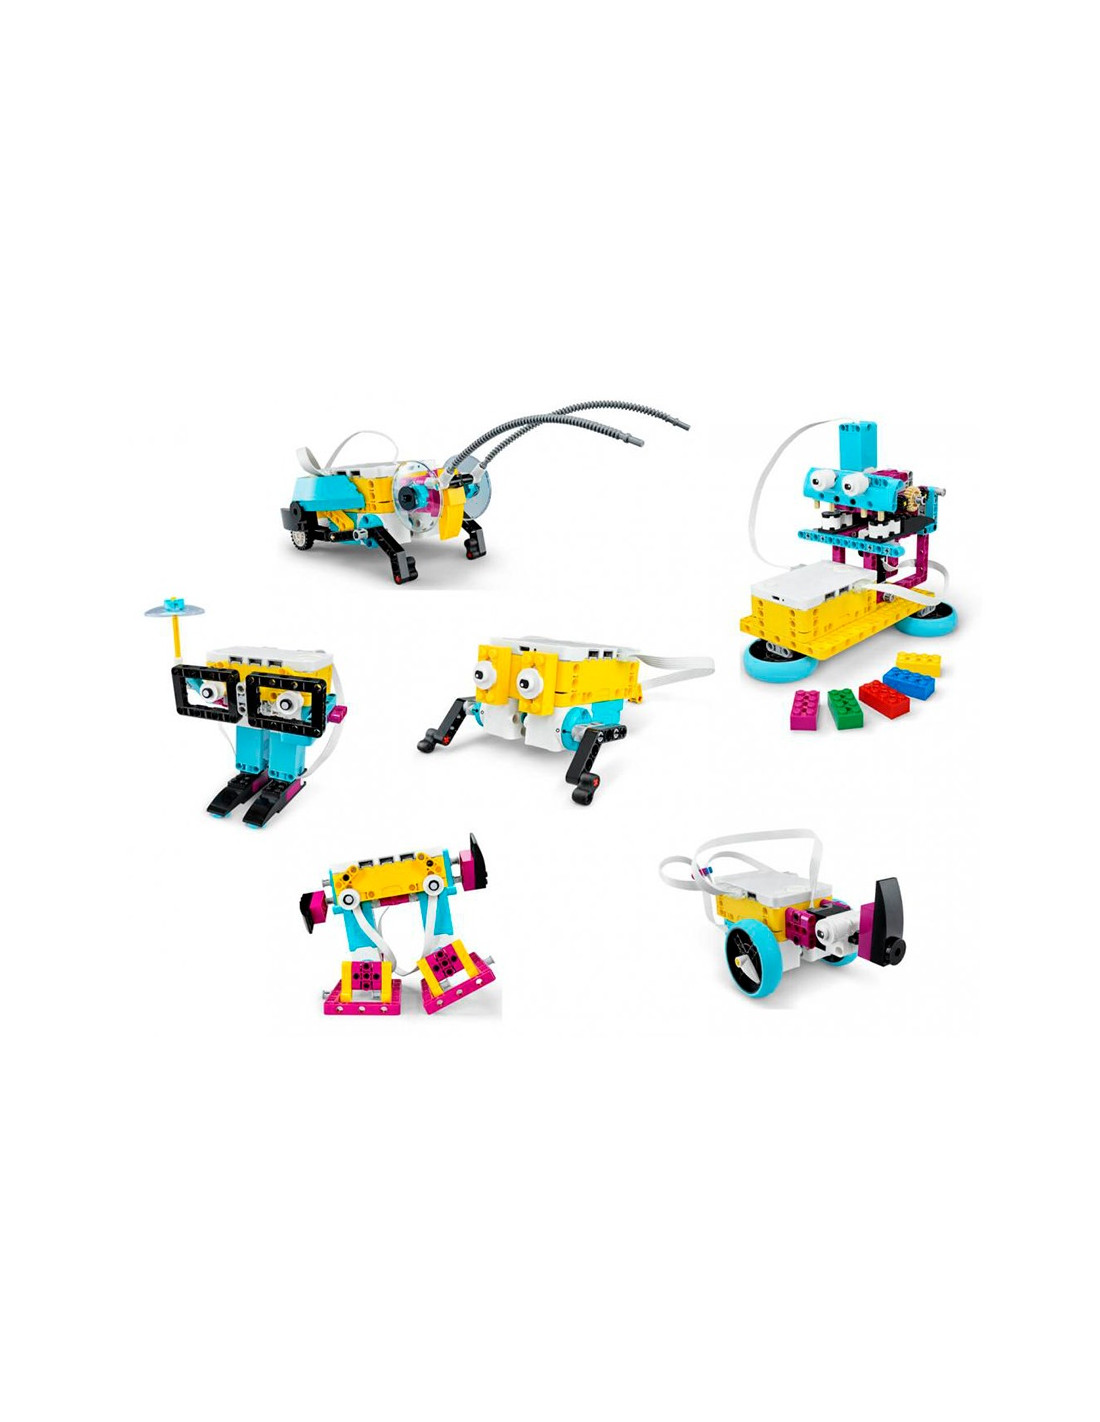 Robots educación - LEGO® Education SPIKE Prime